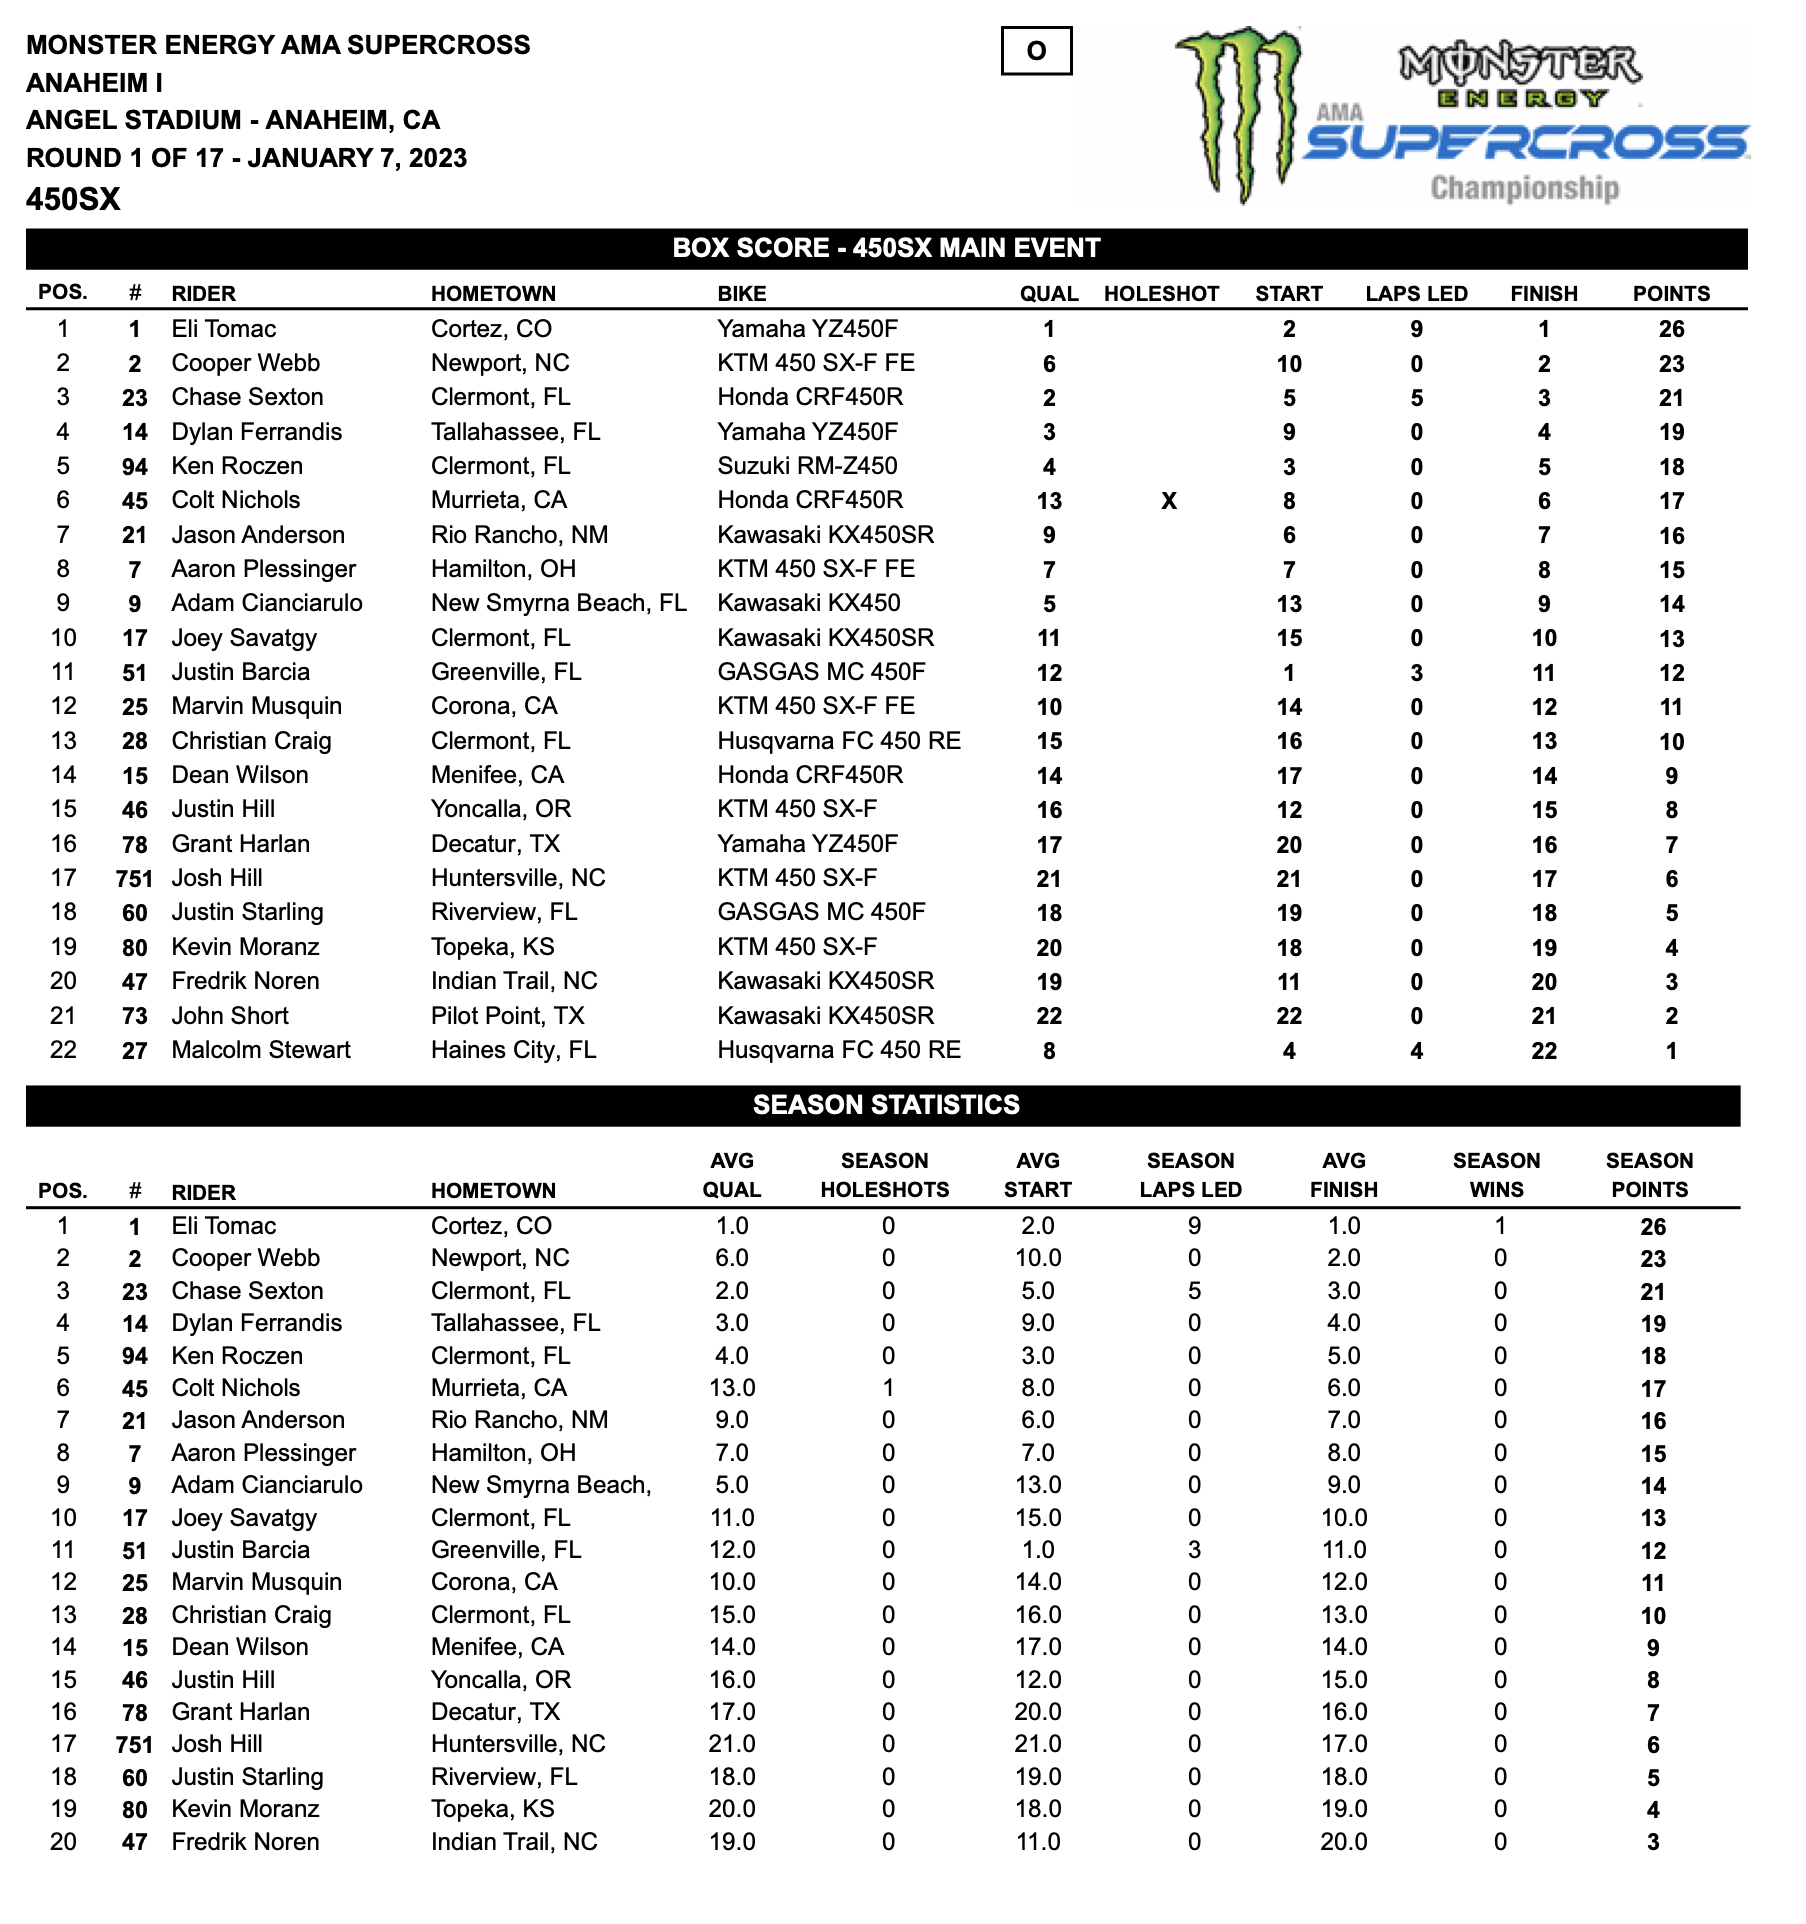 Anaheim 1 (A1) Monster Energy AMA Supercross Championship - 2023